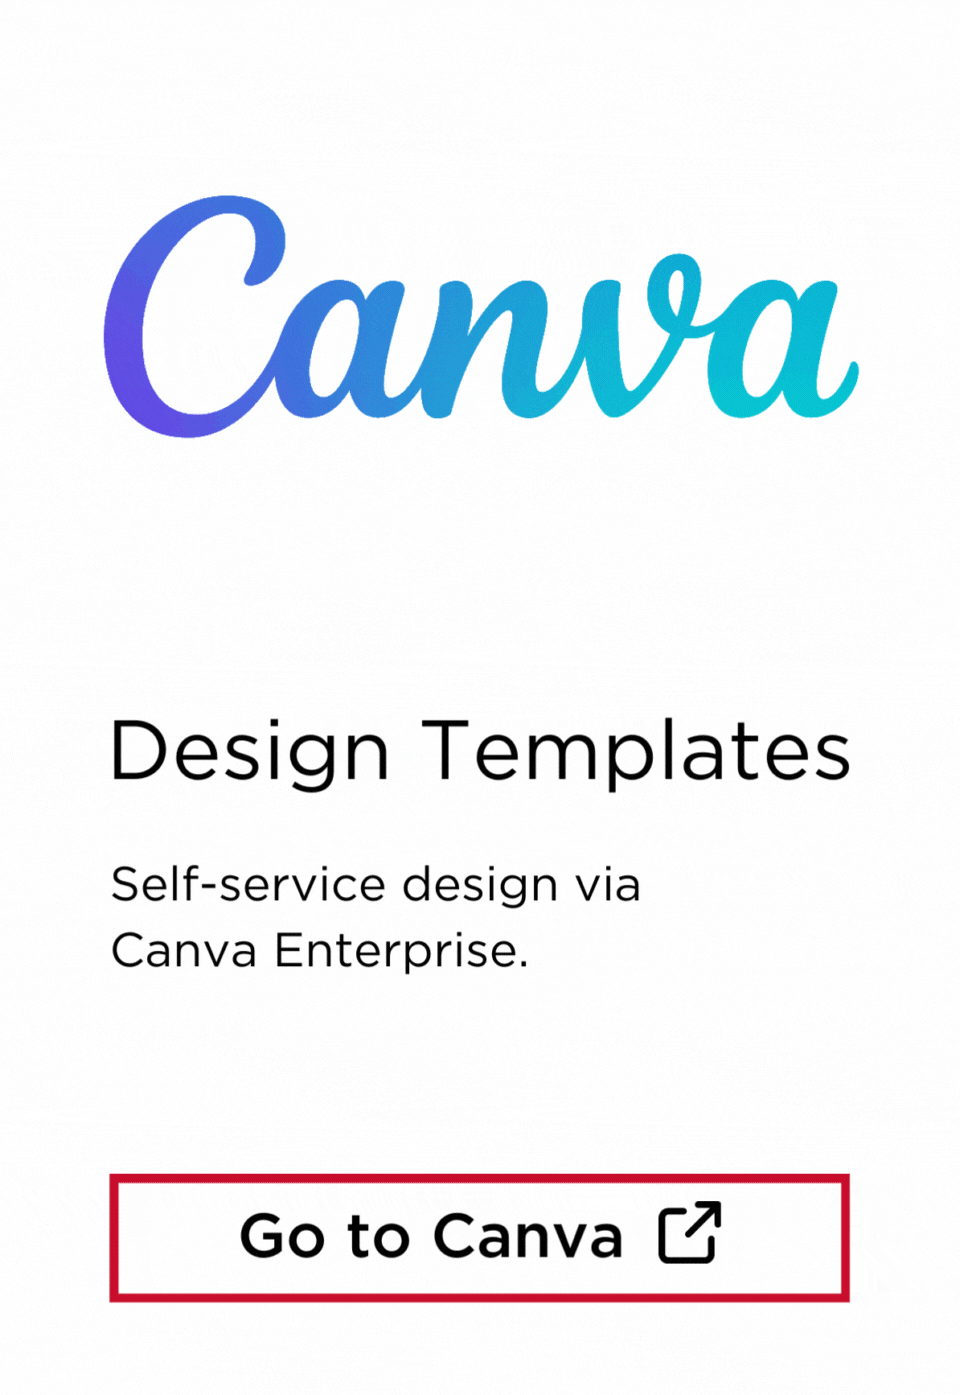 Canva. Design Templates for self-service via Canva Enterprise.